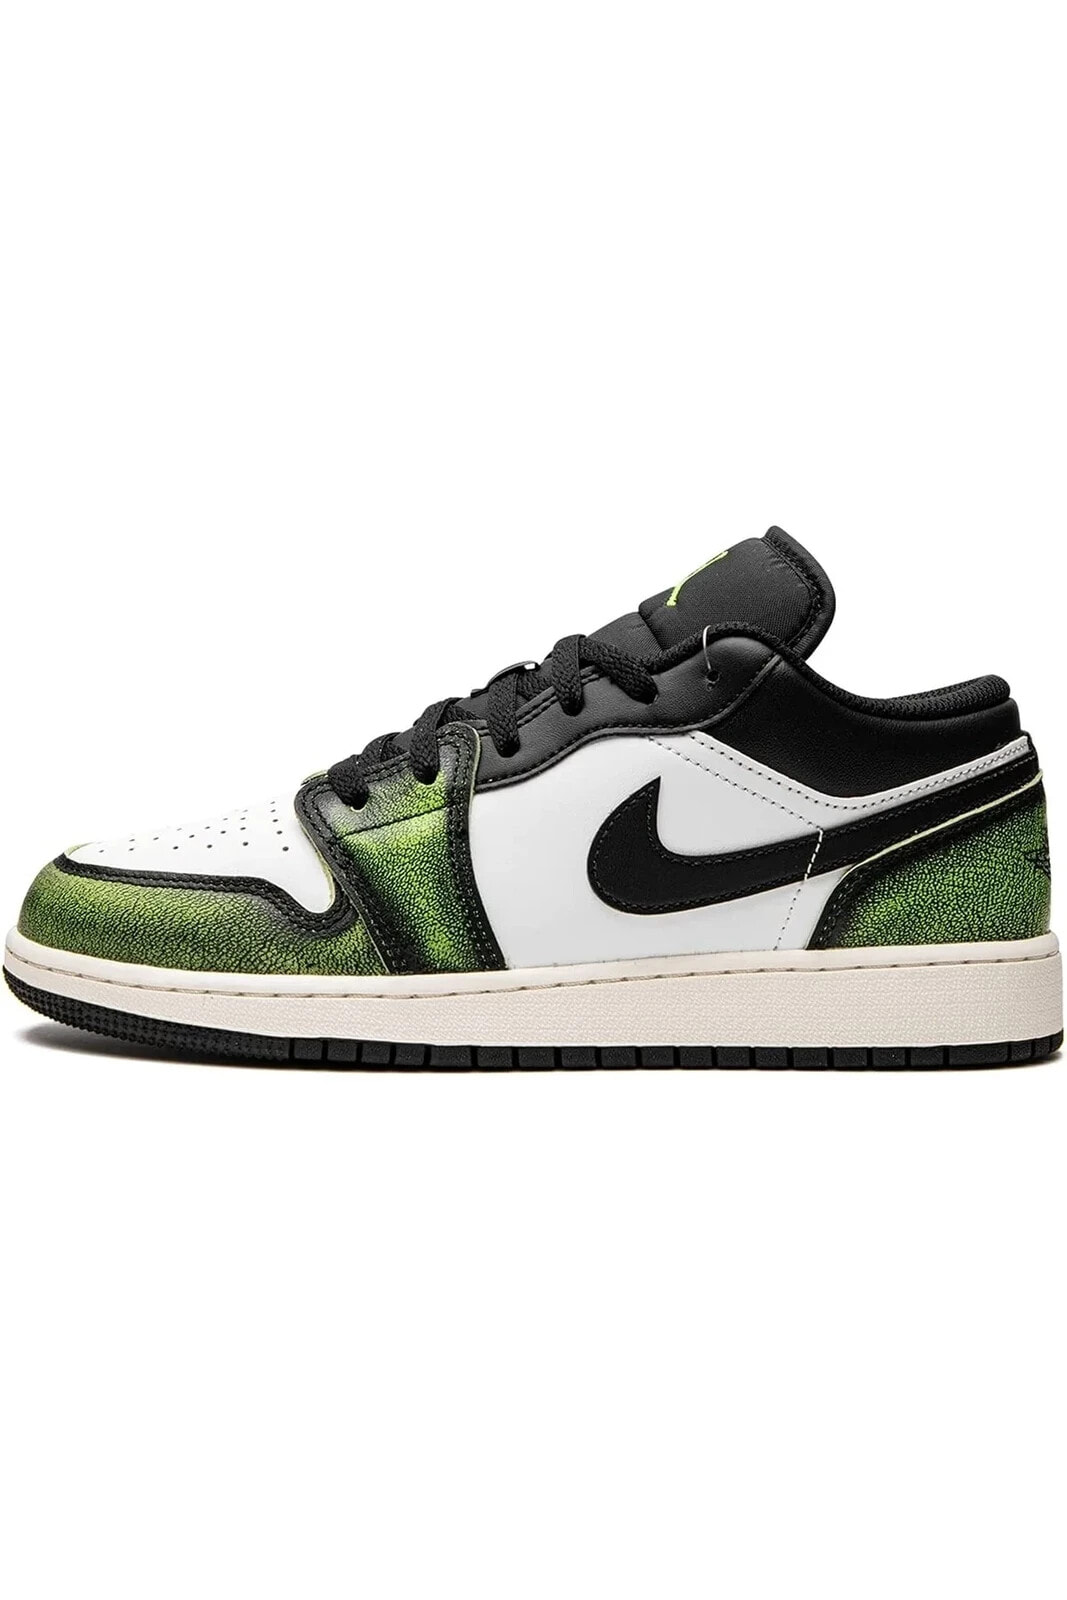 Air Jordan 1 Low White Black Green Sneaker